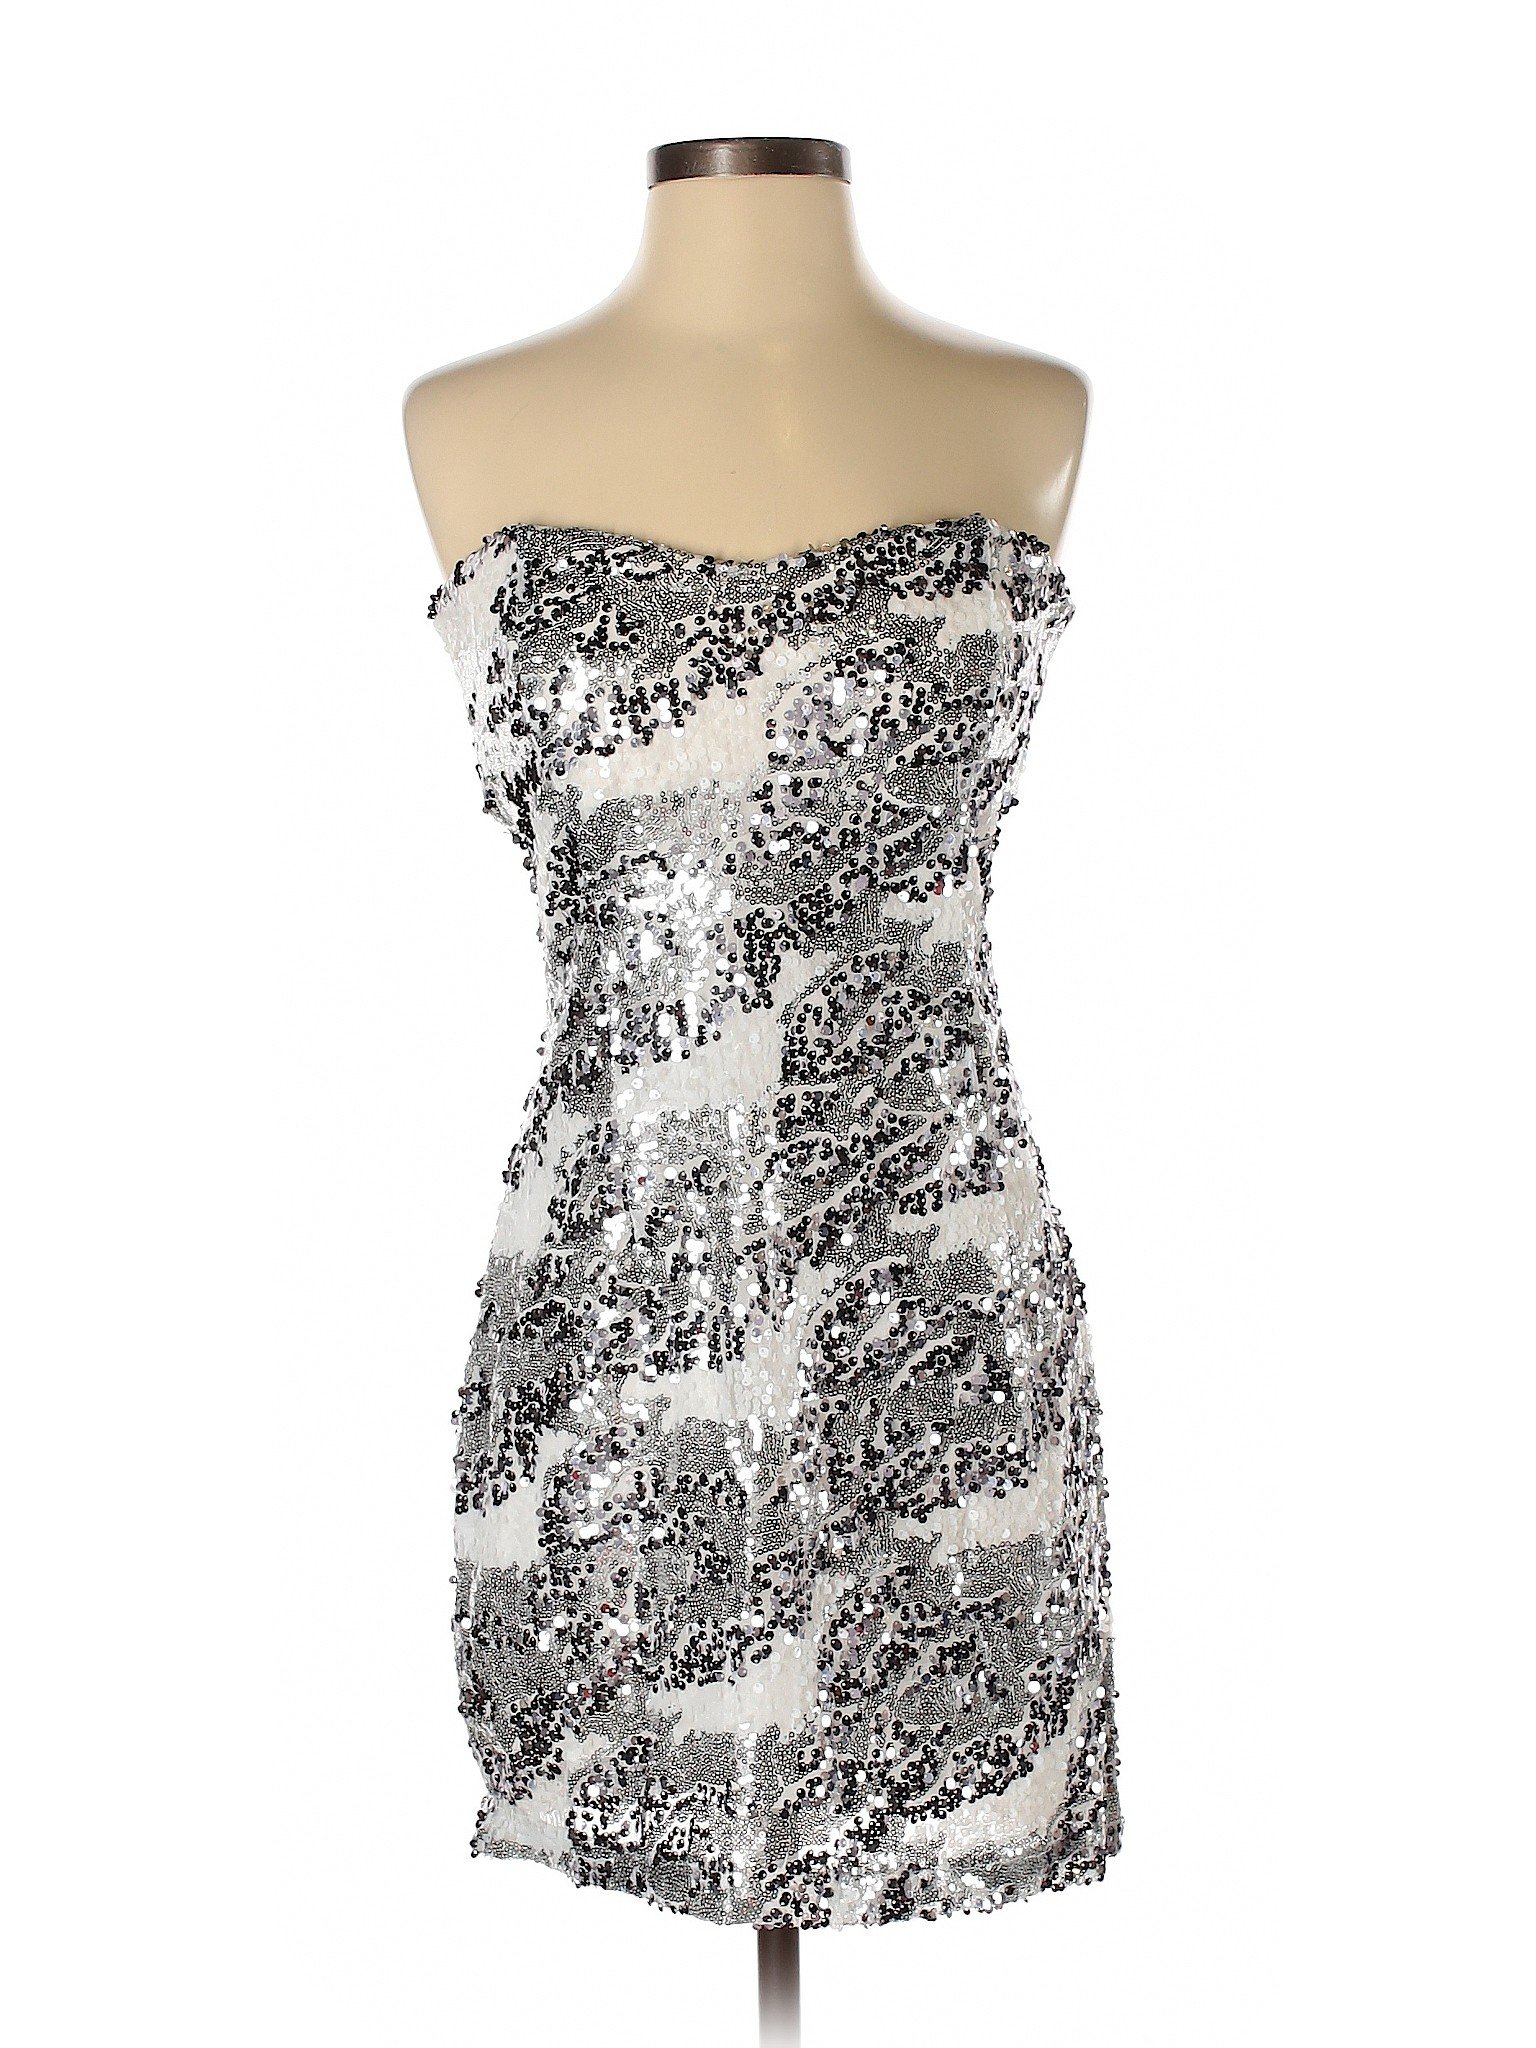 Windsor Women Silver Cocktail Dress 9 | eBay